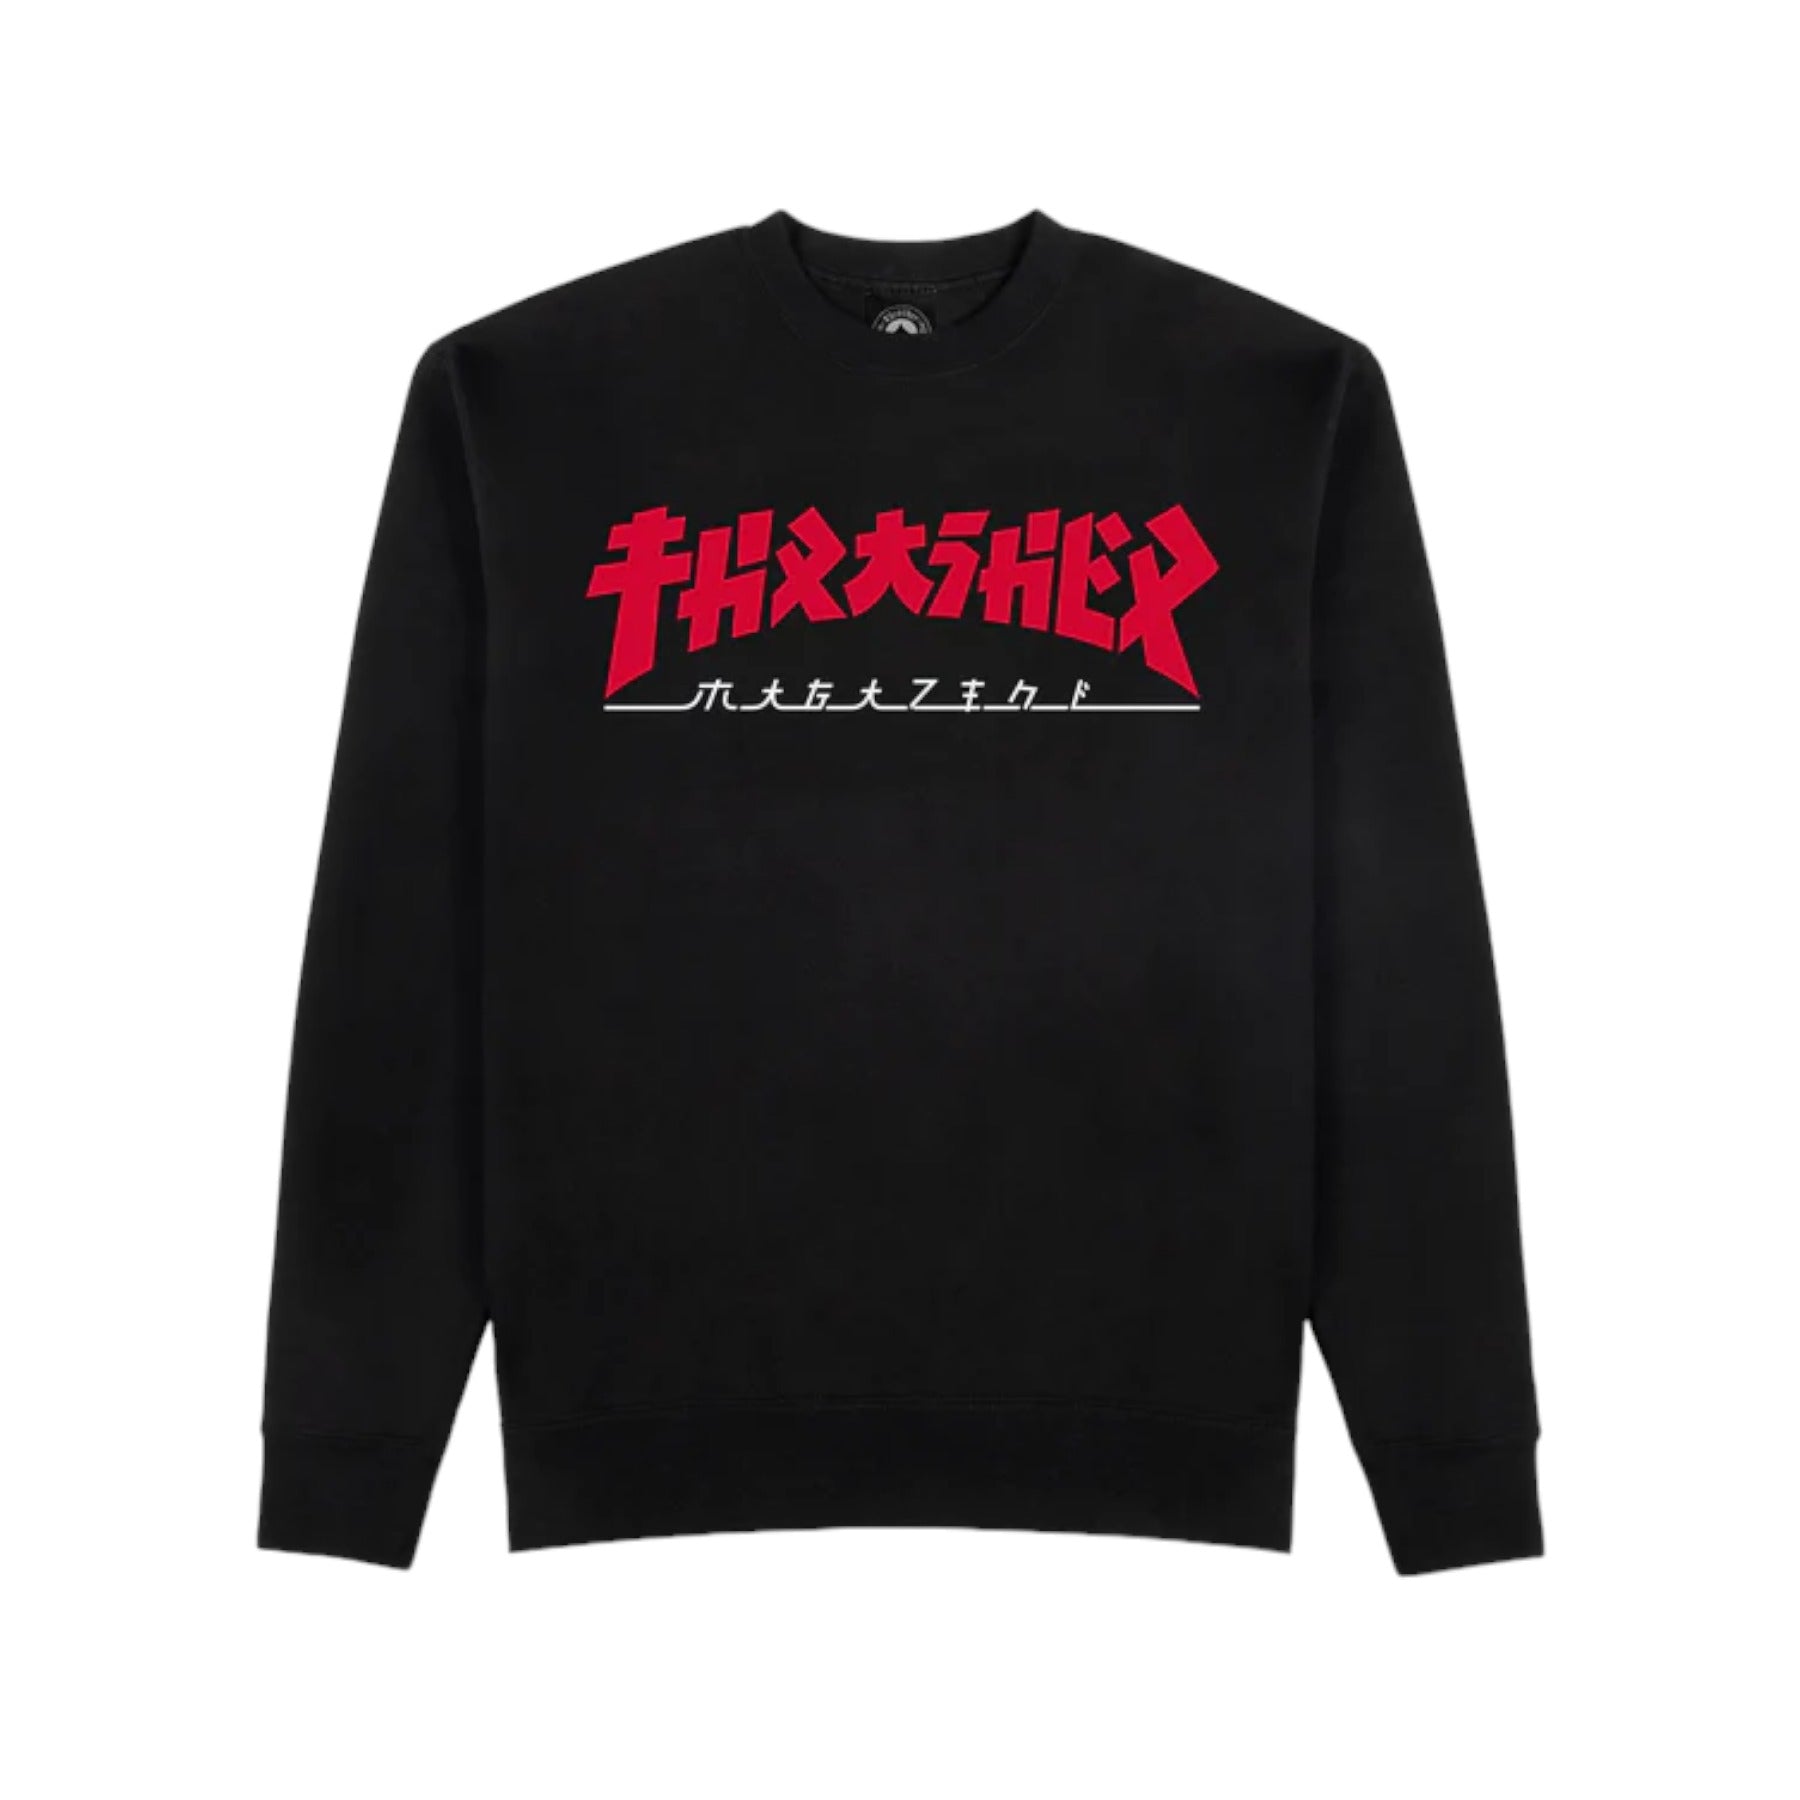 Thrasher Godzilla Crewneck Sweater - Black